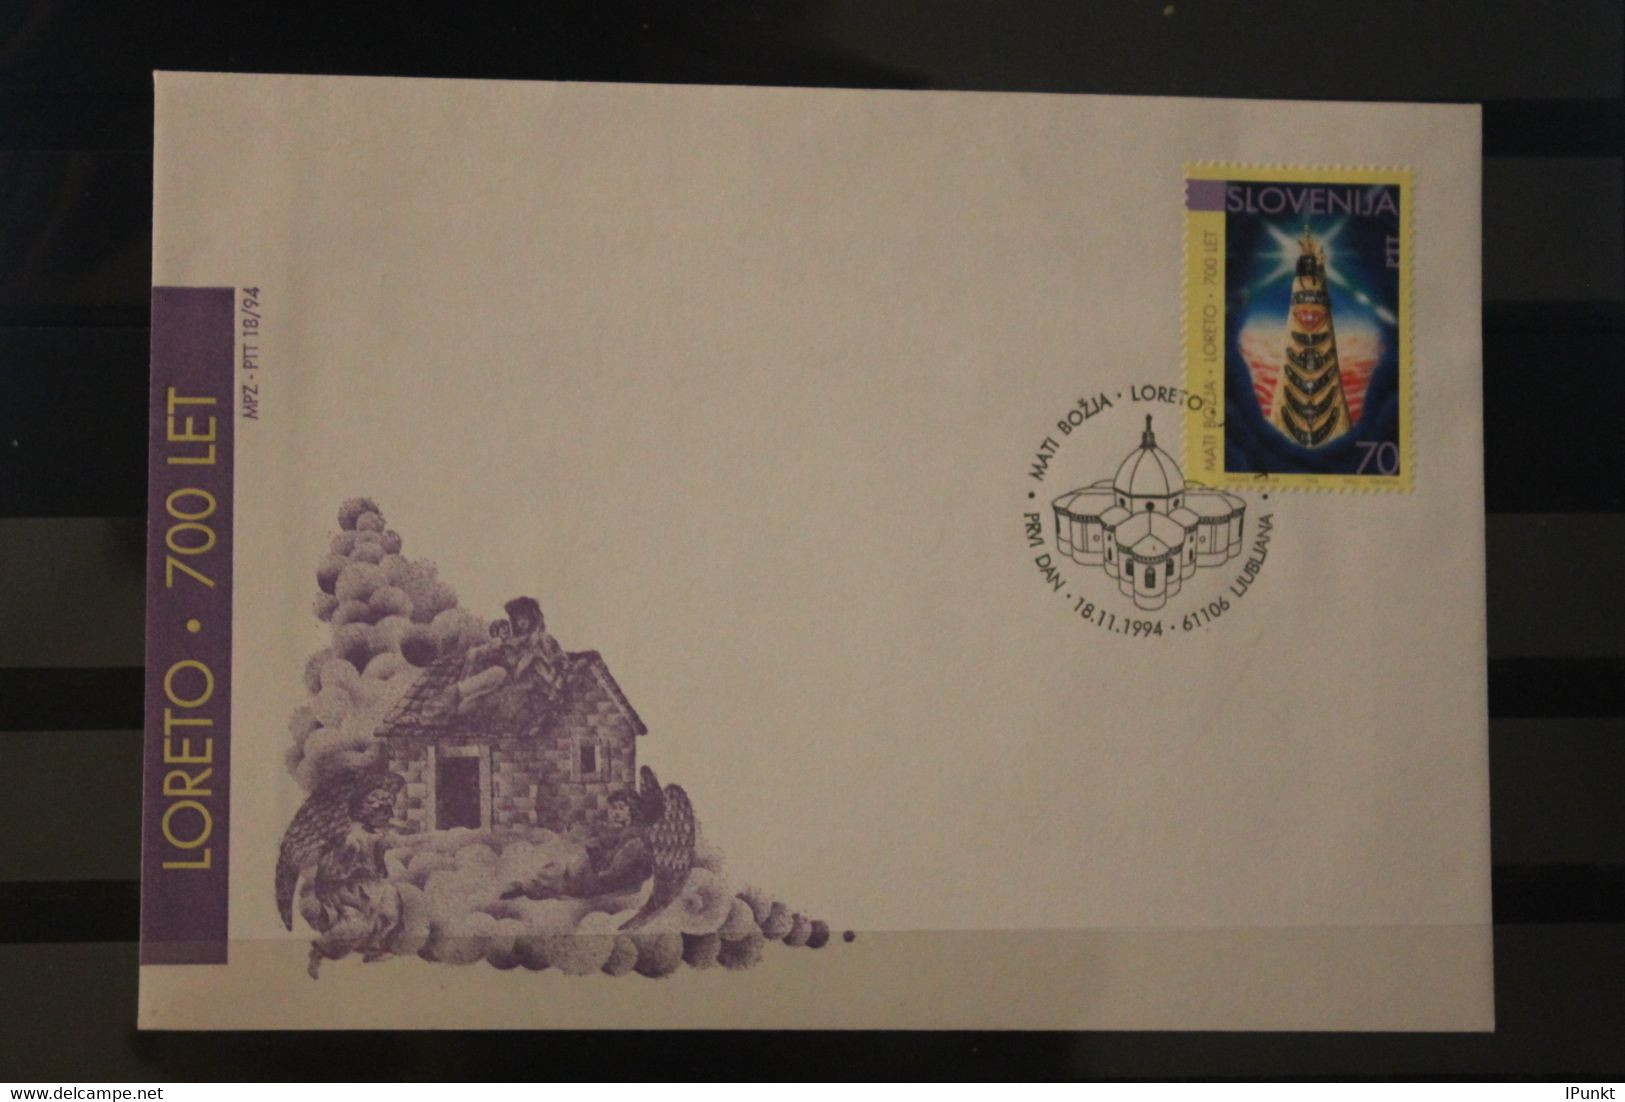 Slowenien 1994; Loreto, FDC, MiNr 101 - Briefe U. Dokumente